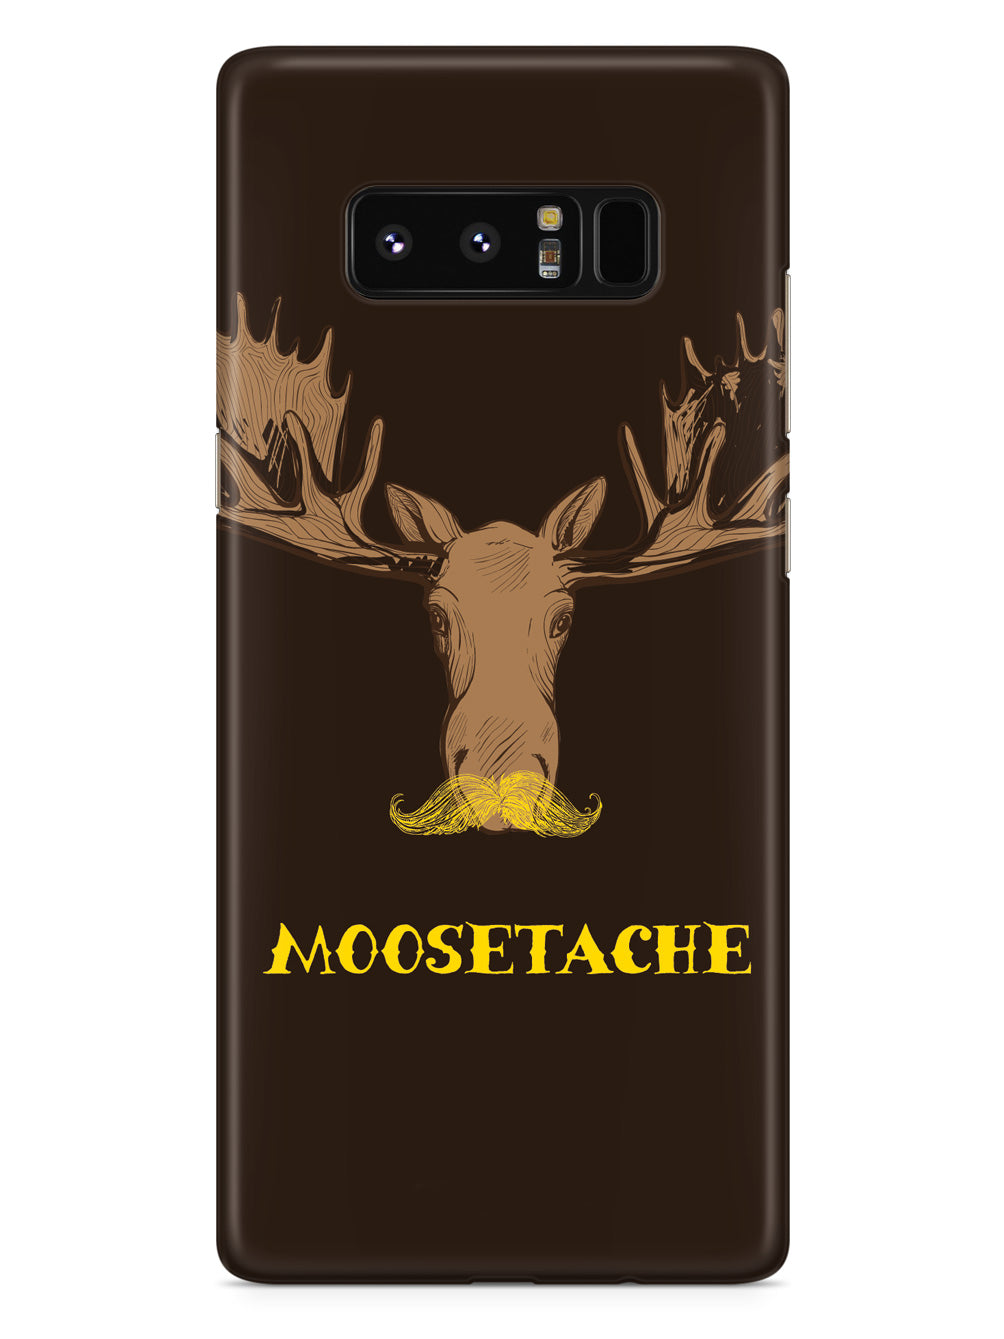 Moosetache - Mustache Case